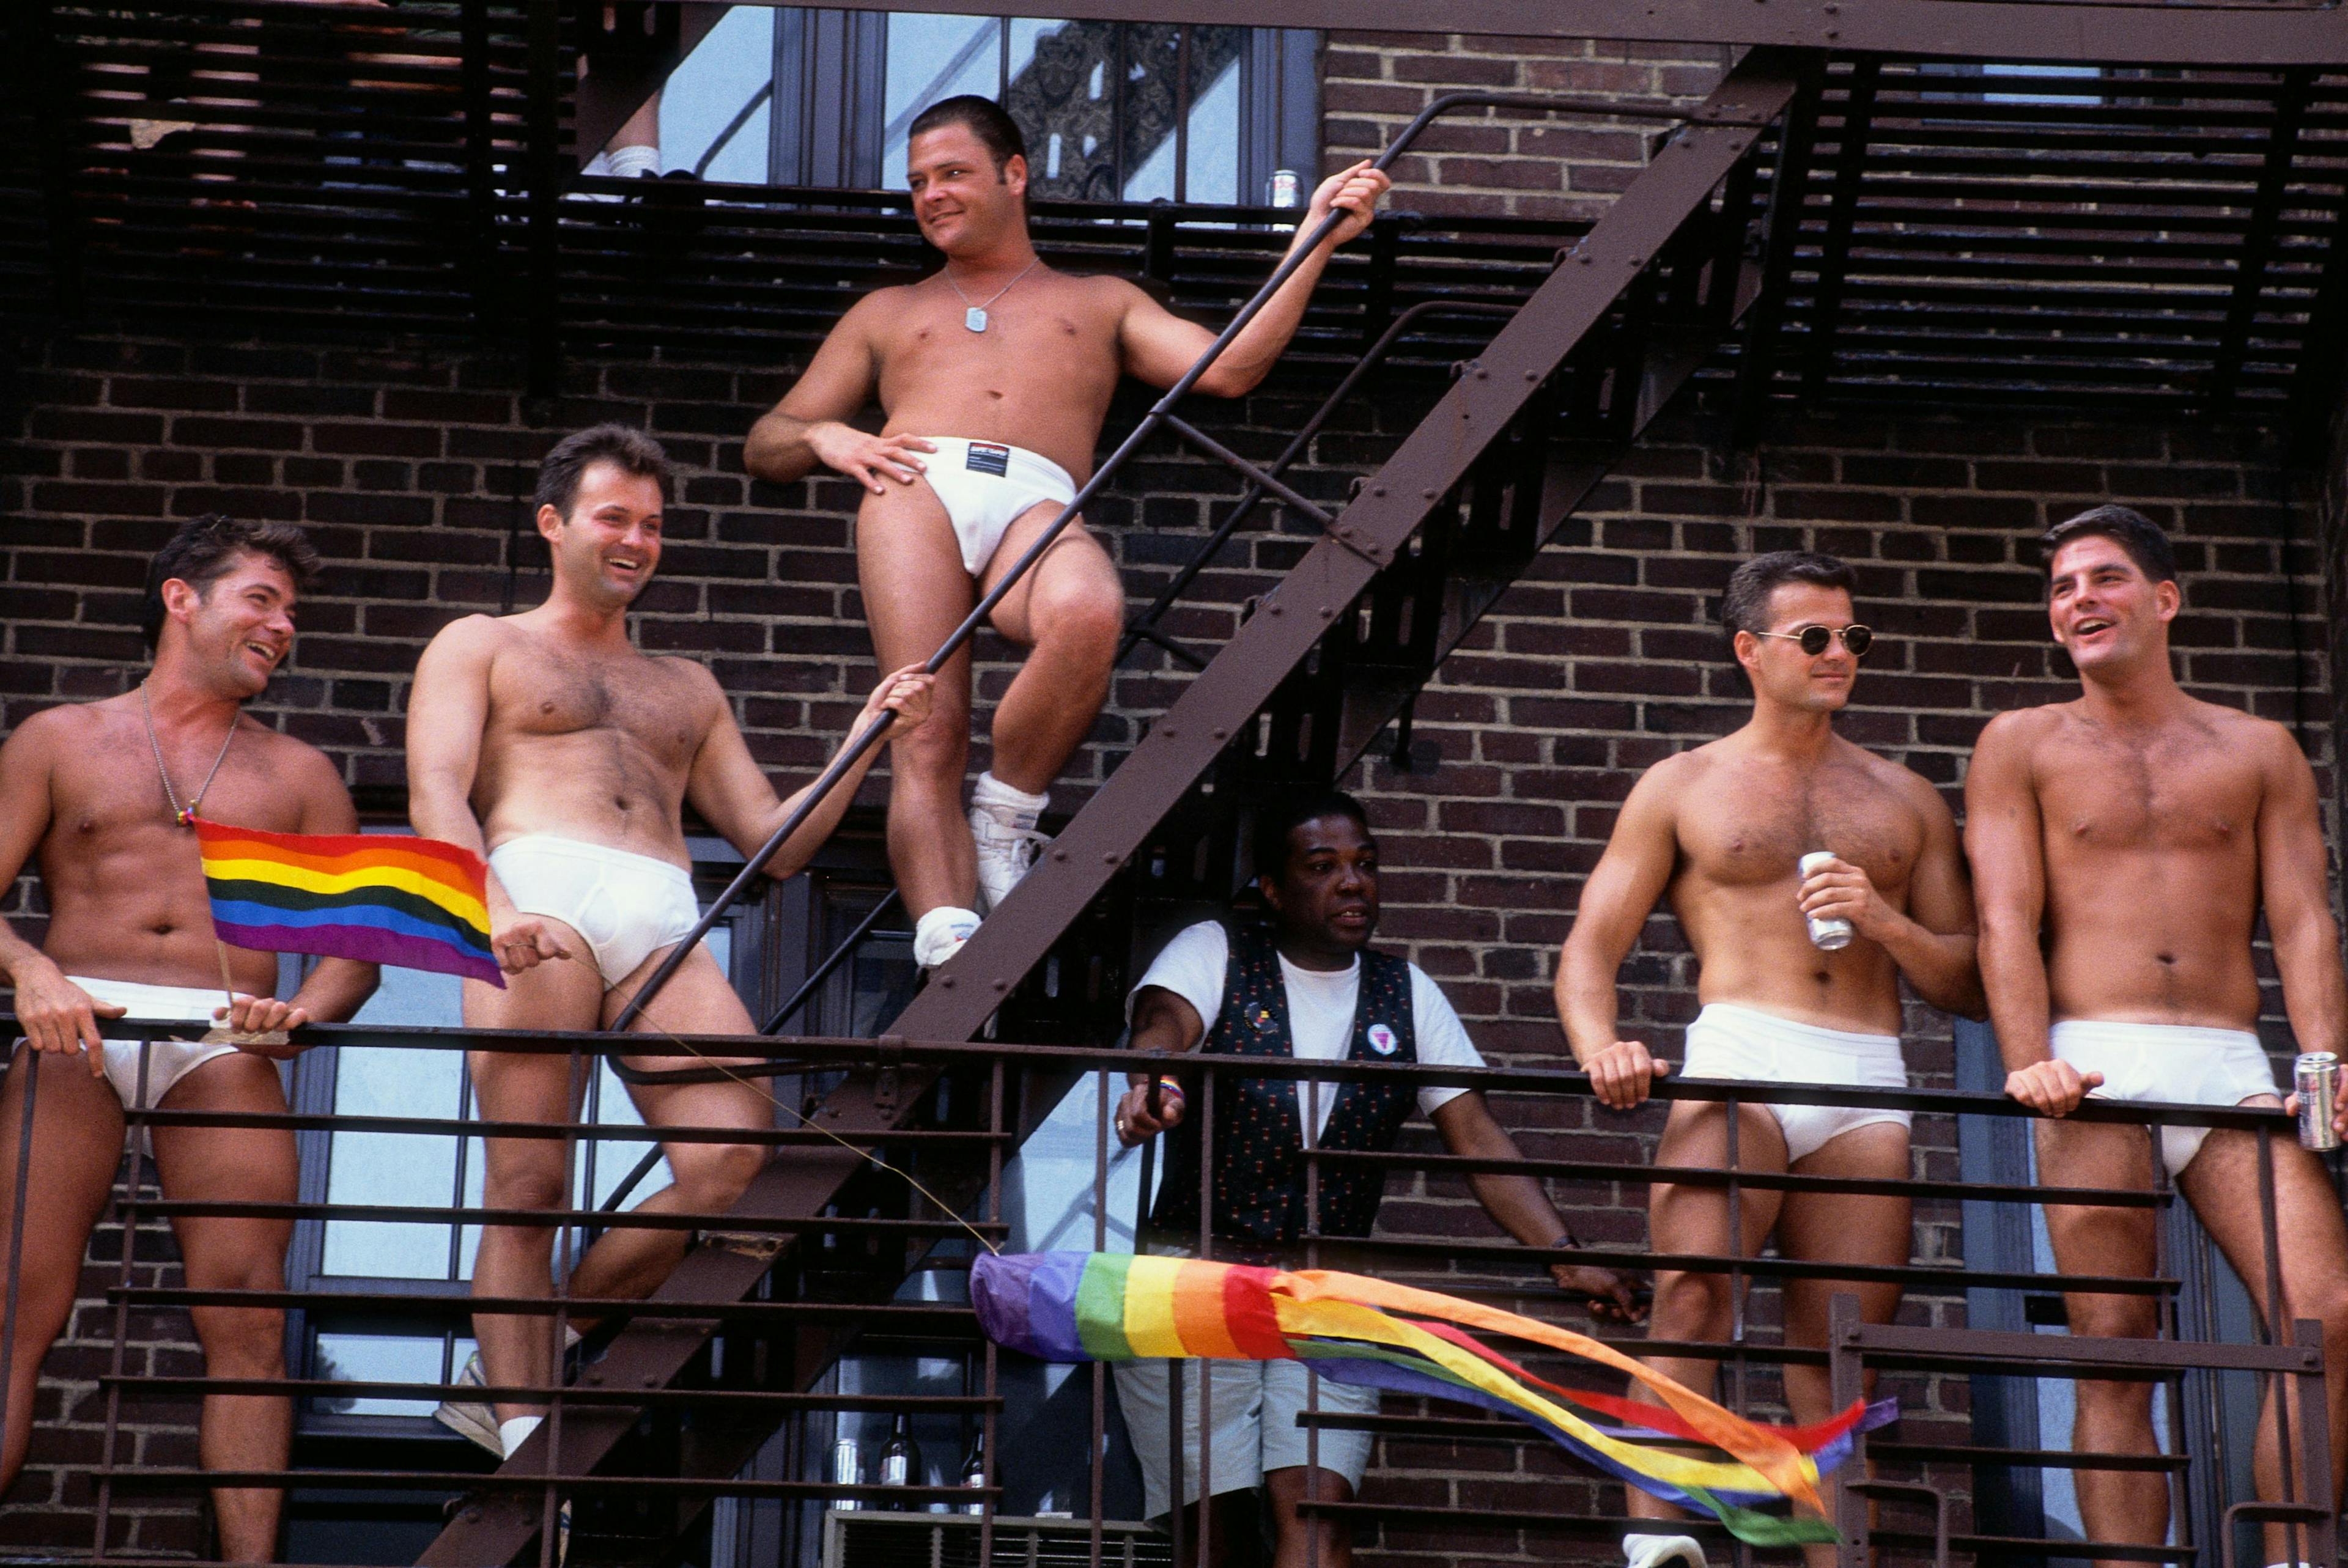 enjoyment:cb2 festivity:cb2 african-american ethnicity:cb3 ethnic diversity:cb2 group of people:cb3 gay male:cb3 caucasian ethnicity:cb3 political and social issues:cb2 urban scene:cb2 partially nude:cb2 gay rights:cb2 outdoors:cb2 celebrating:cb3 latin american and hispanic ethnicity:cb3 american:cb3 fire escape:cb3 city:cb2 pride parade:cb2 manhattan:cb2 back person shorts swimwear adult male man underwear undershirt brick